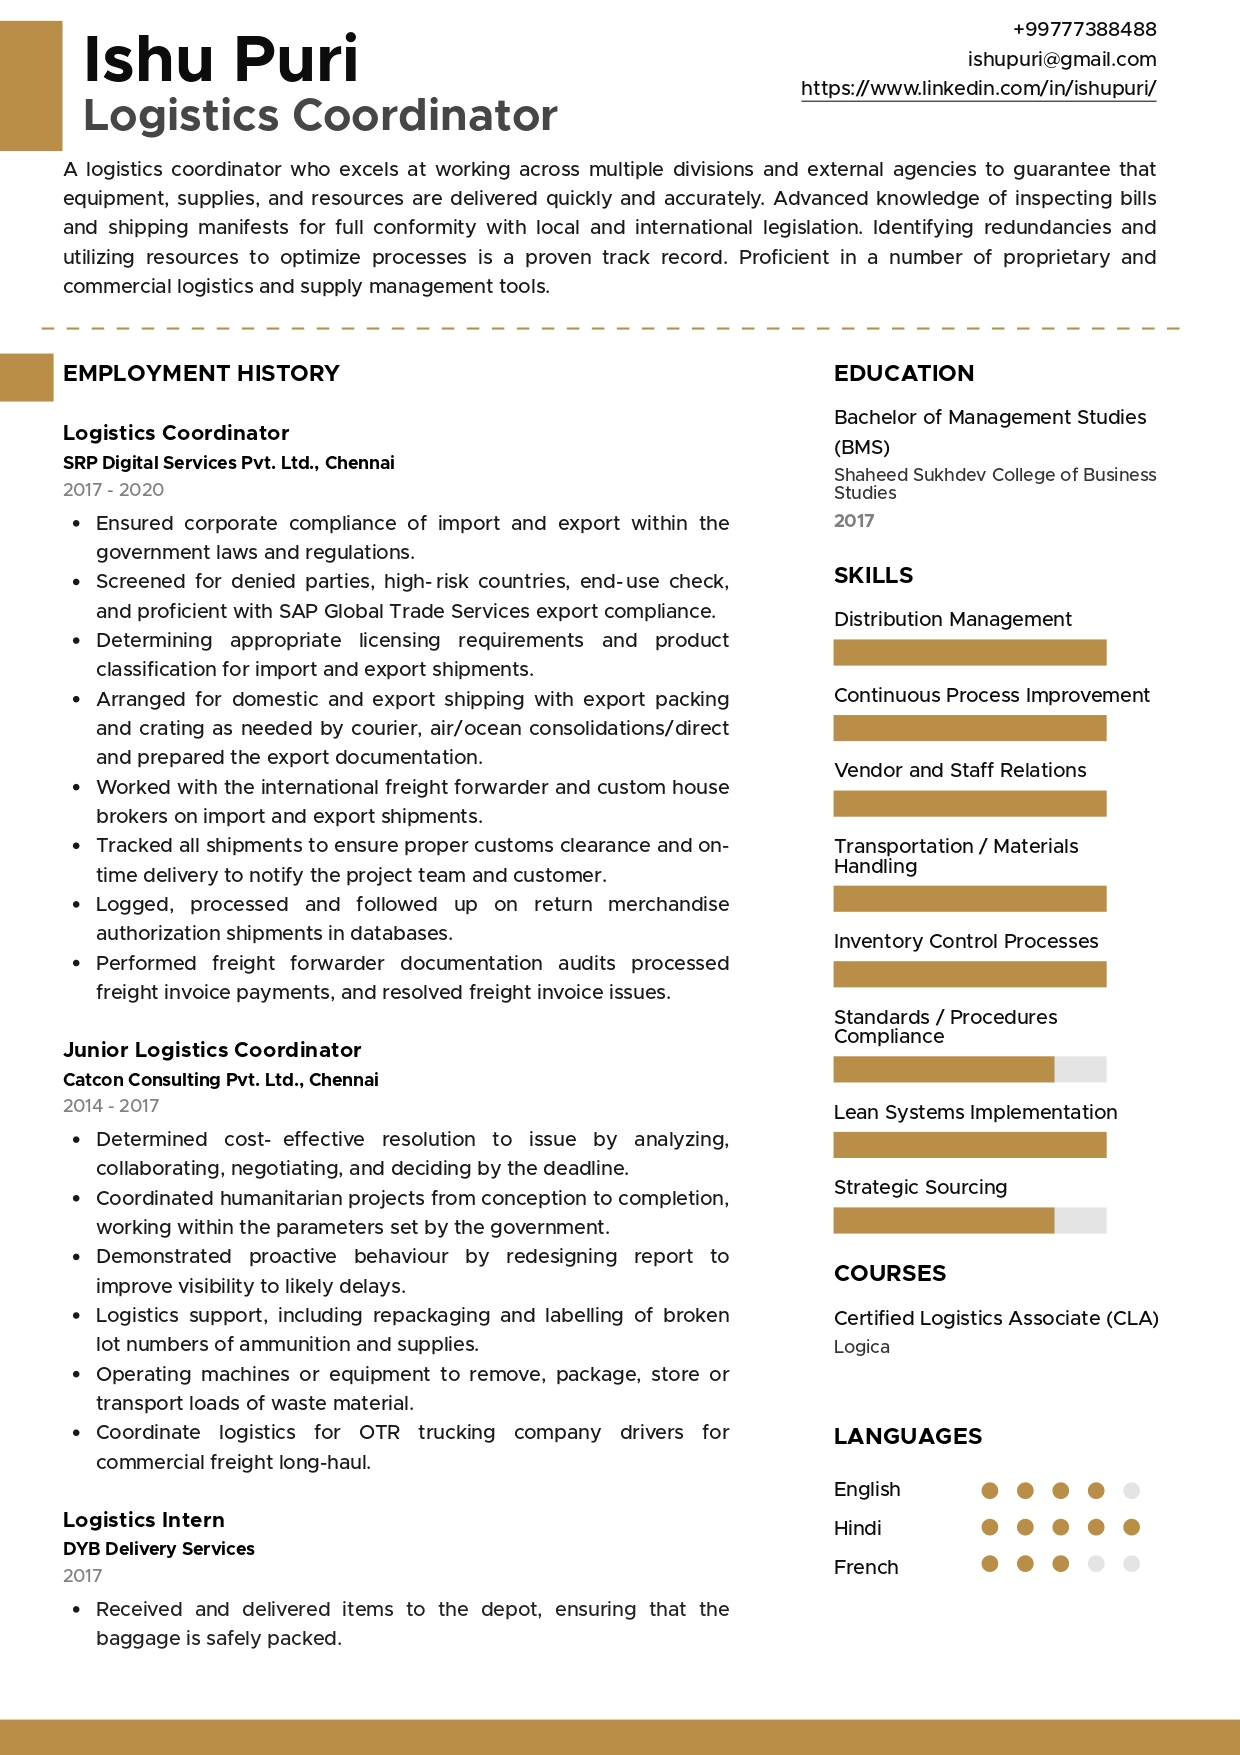 Resume of Logistics Coordinator built on Resumod